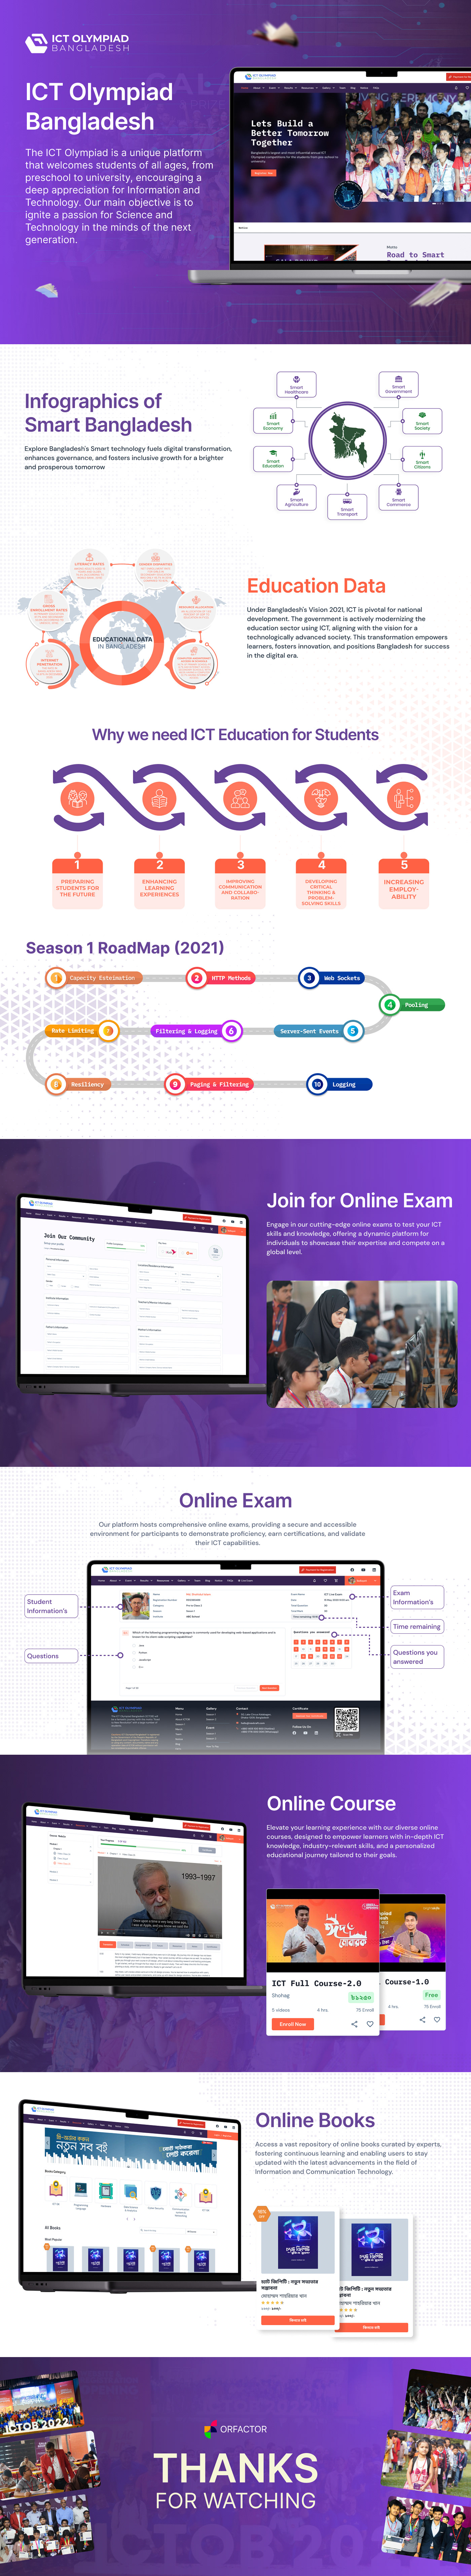 olympiad Website Education exam book course Bangladesh ict ICT Olympiad OrFactor